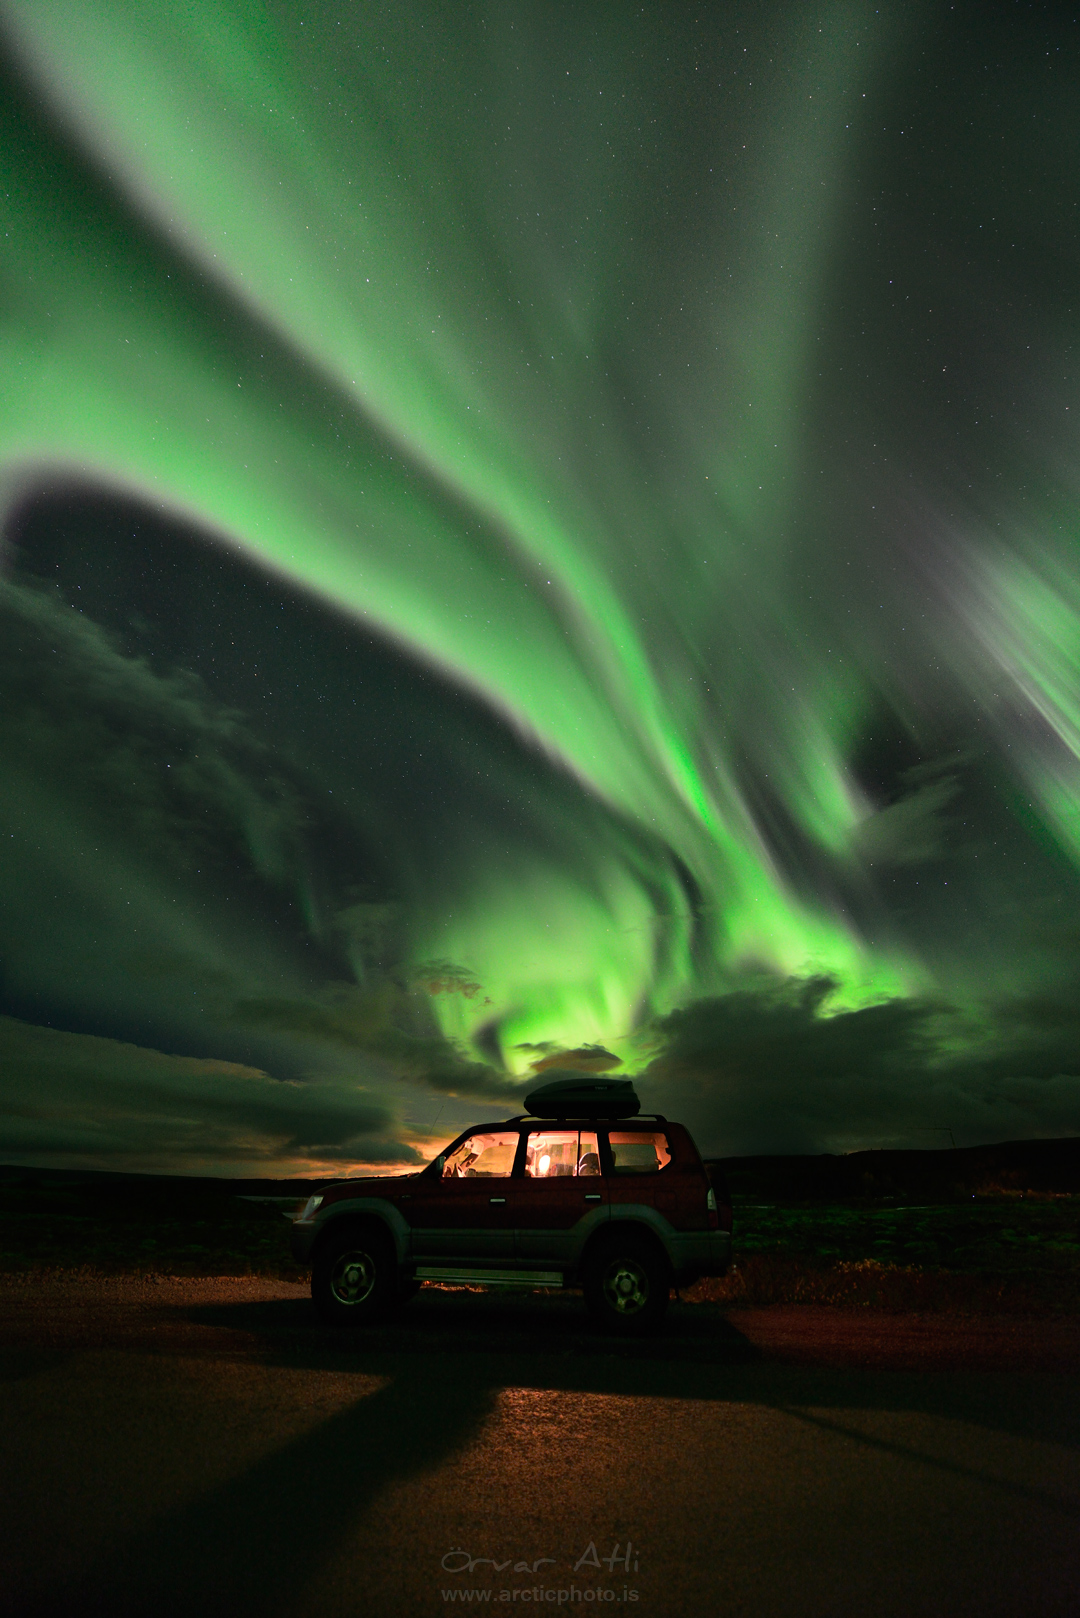 All Images | Arctic Photo – Iceland – Icelandic Landscape Photography